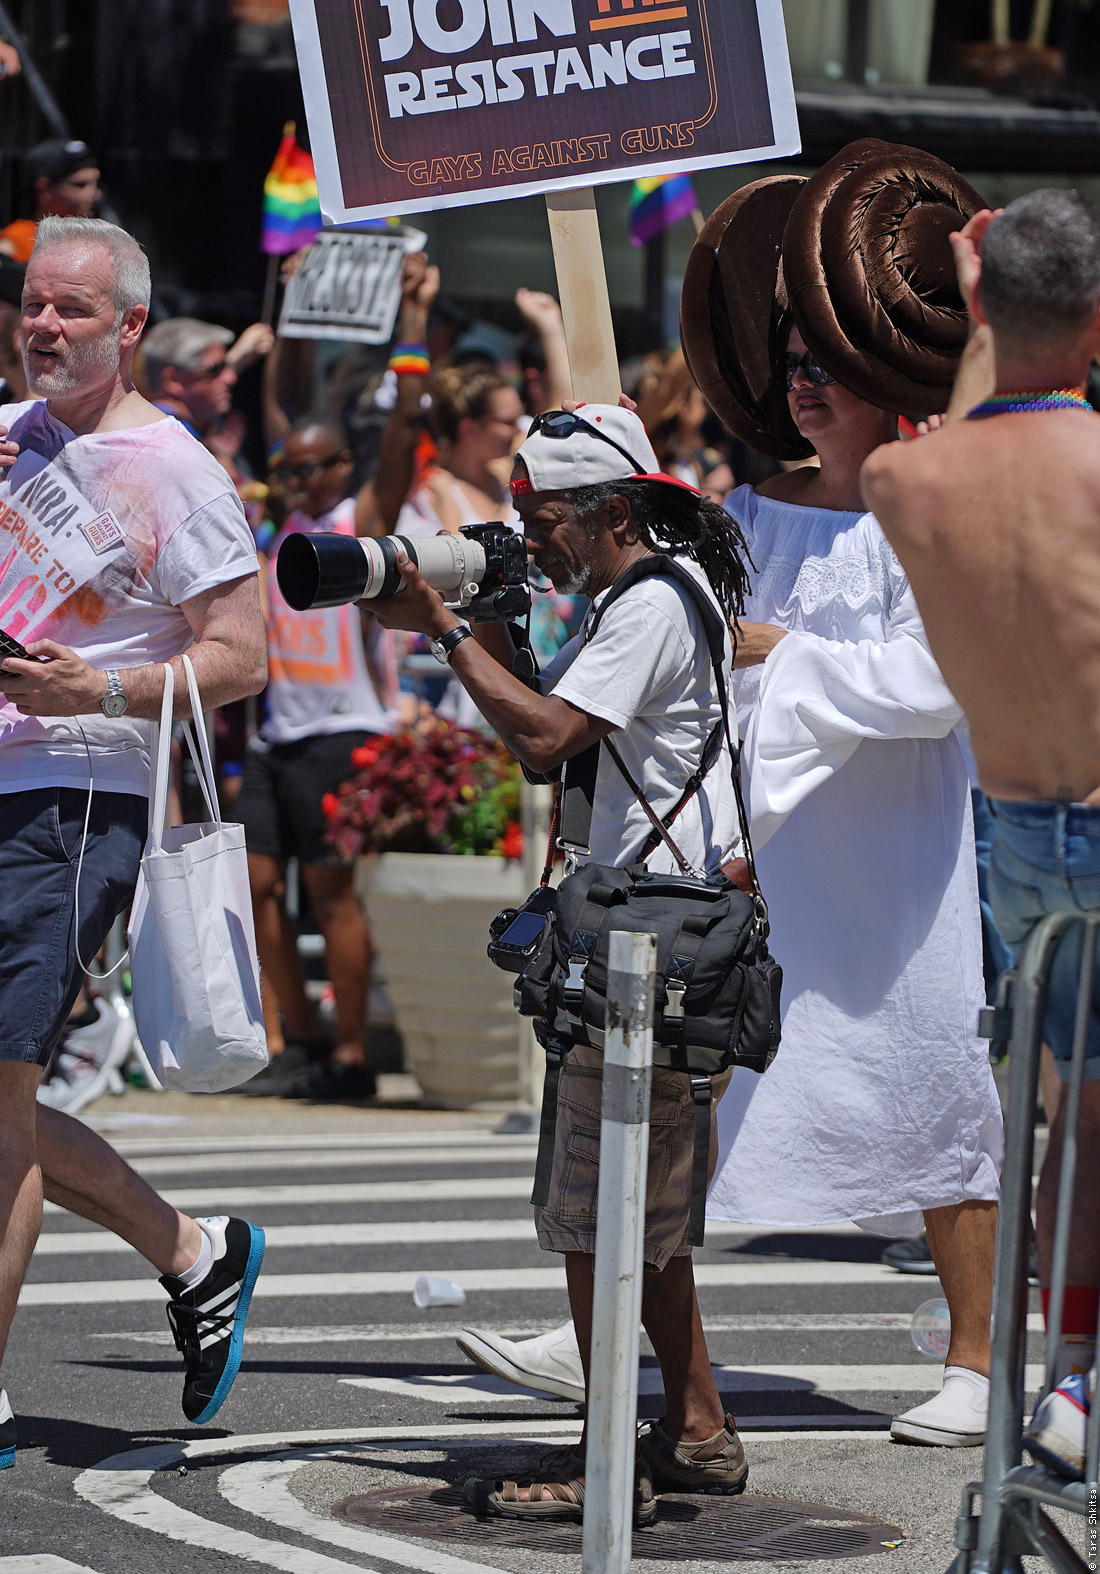 Transgender Pride Parade New York 2017